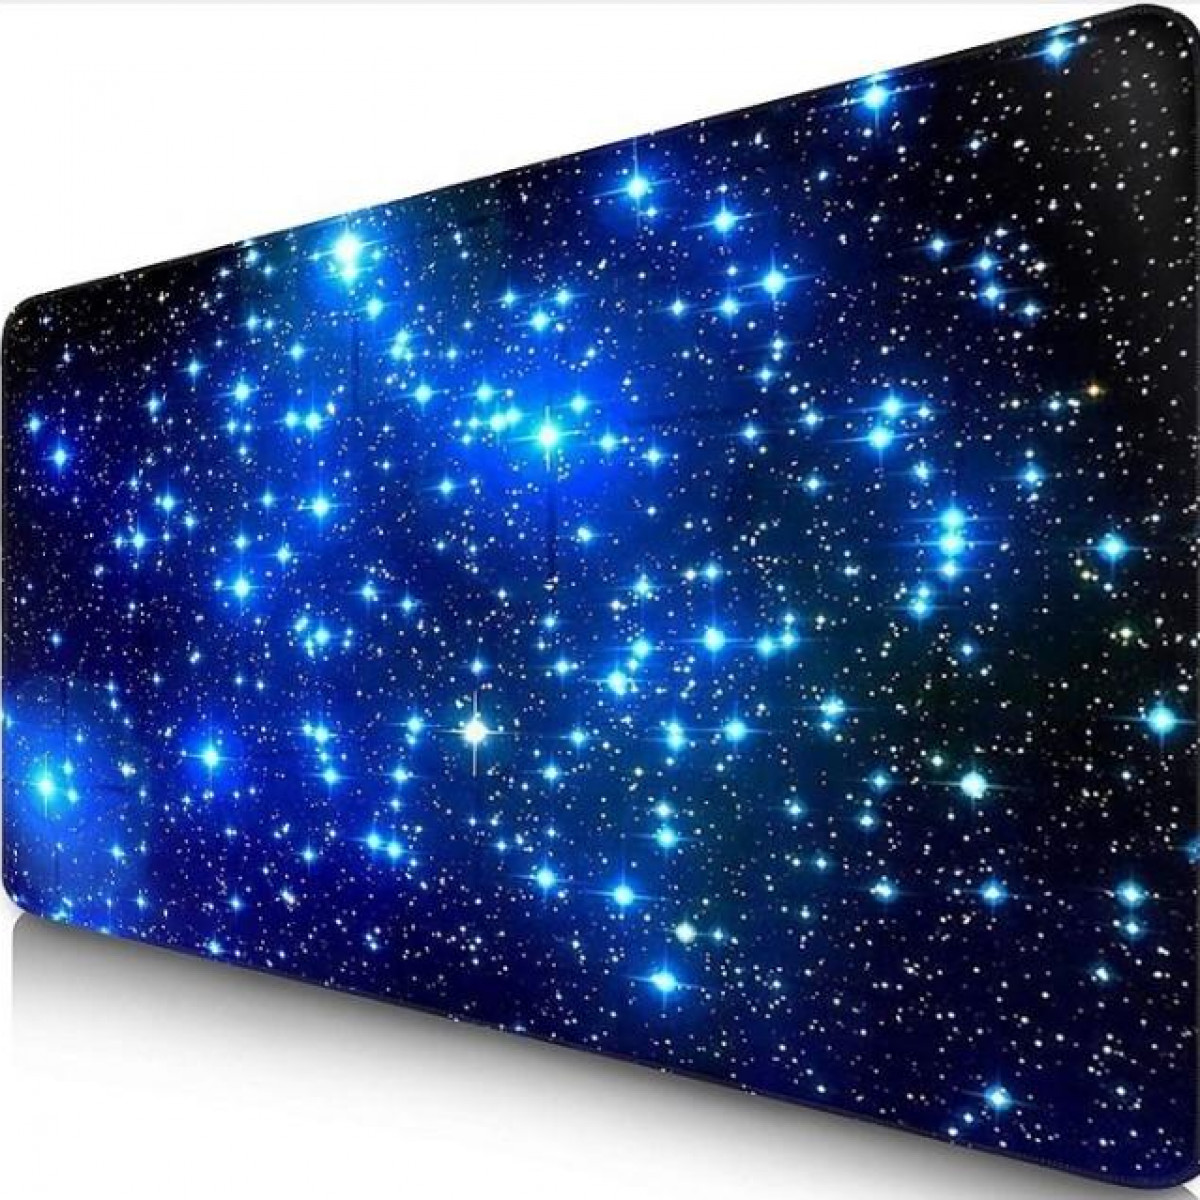 INF Großes Mauspad Sternenhimmelmuster Schwarz/Blau mit cm cm) cm (0,2 x 30x80 Mauspad 80